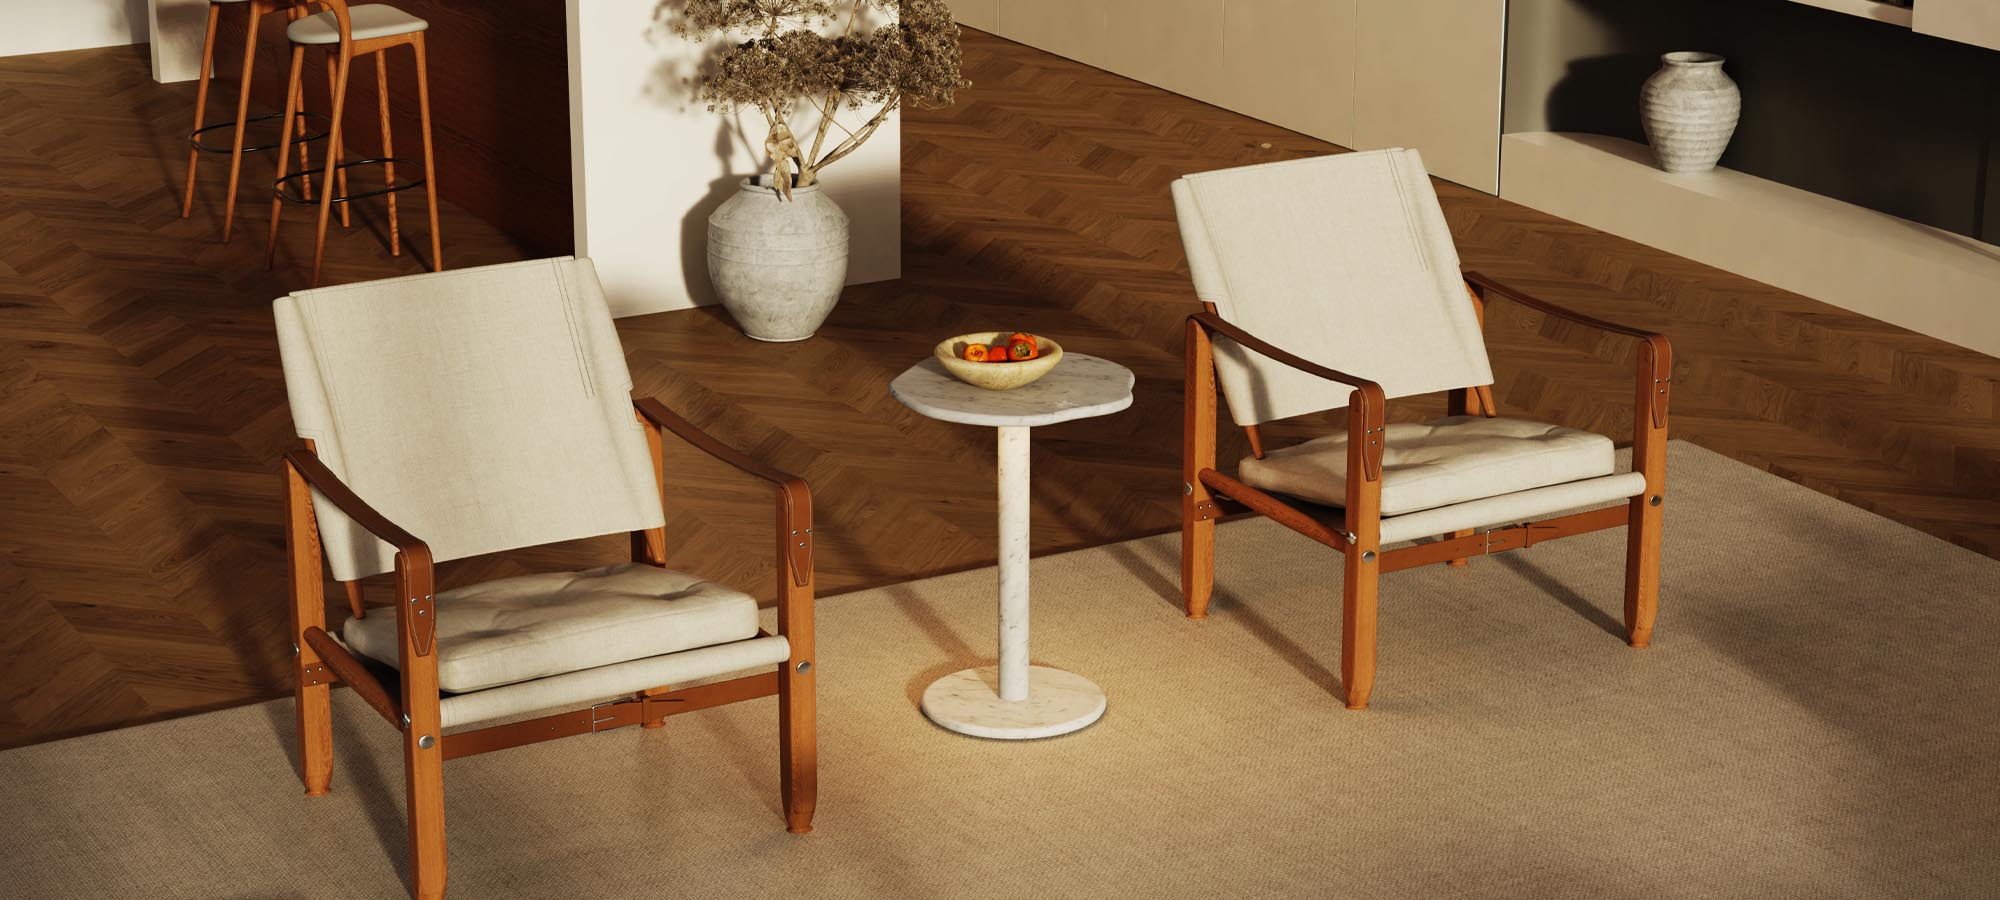 OIXDESIGN PeaPod Coffee Table Set, Italian Carrara Marble, Side View